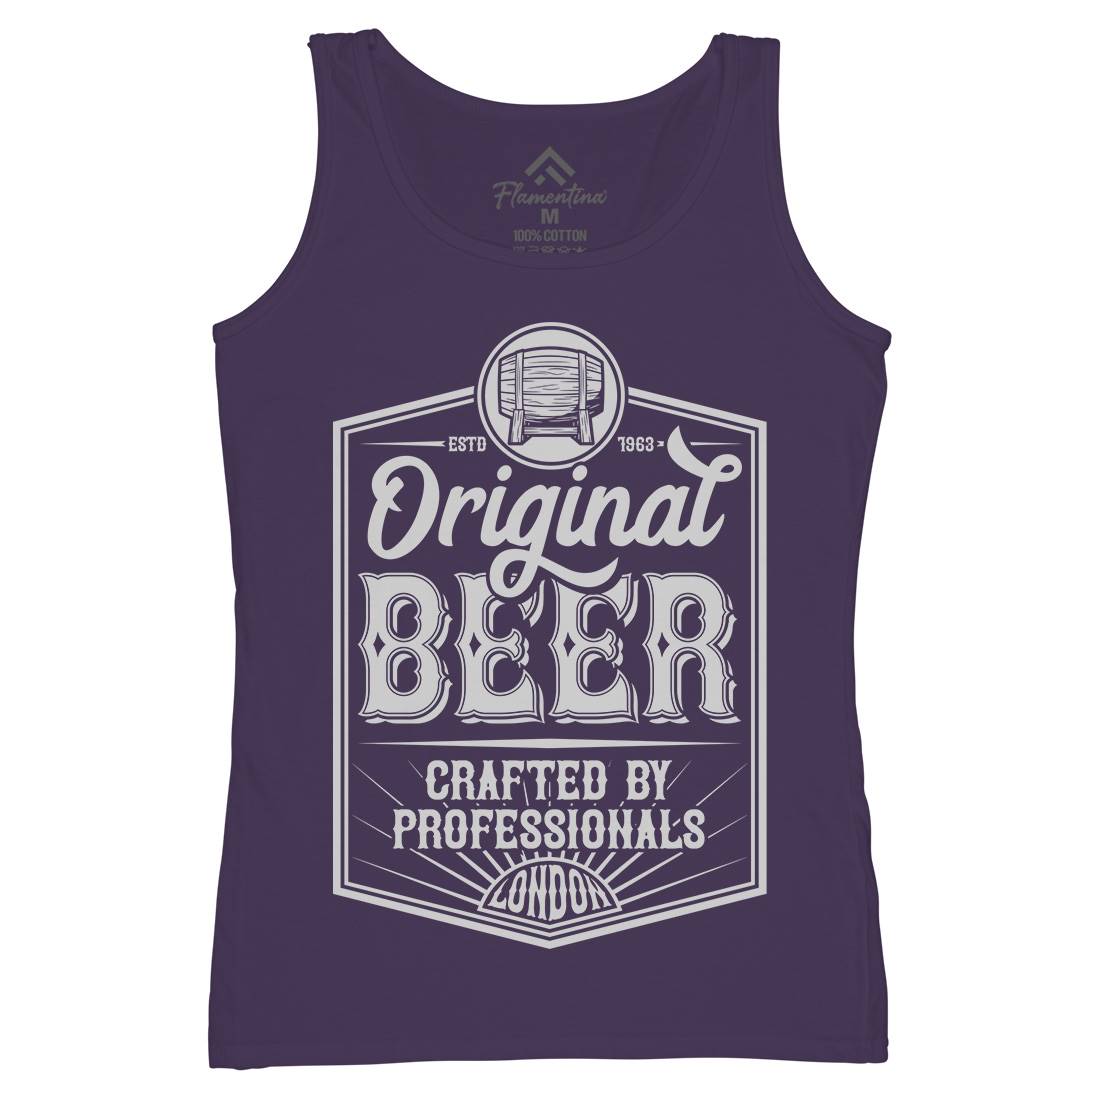 Original Beer Womens Organic Tank Top Vest Drinks B280